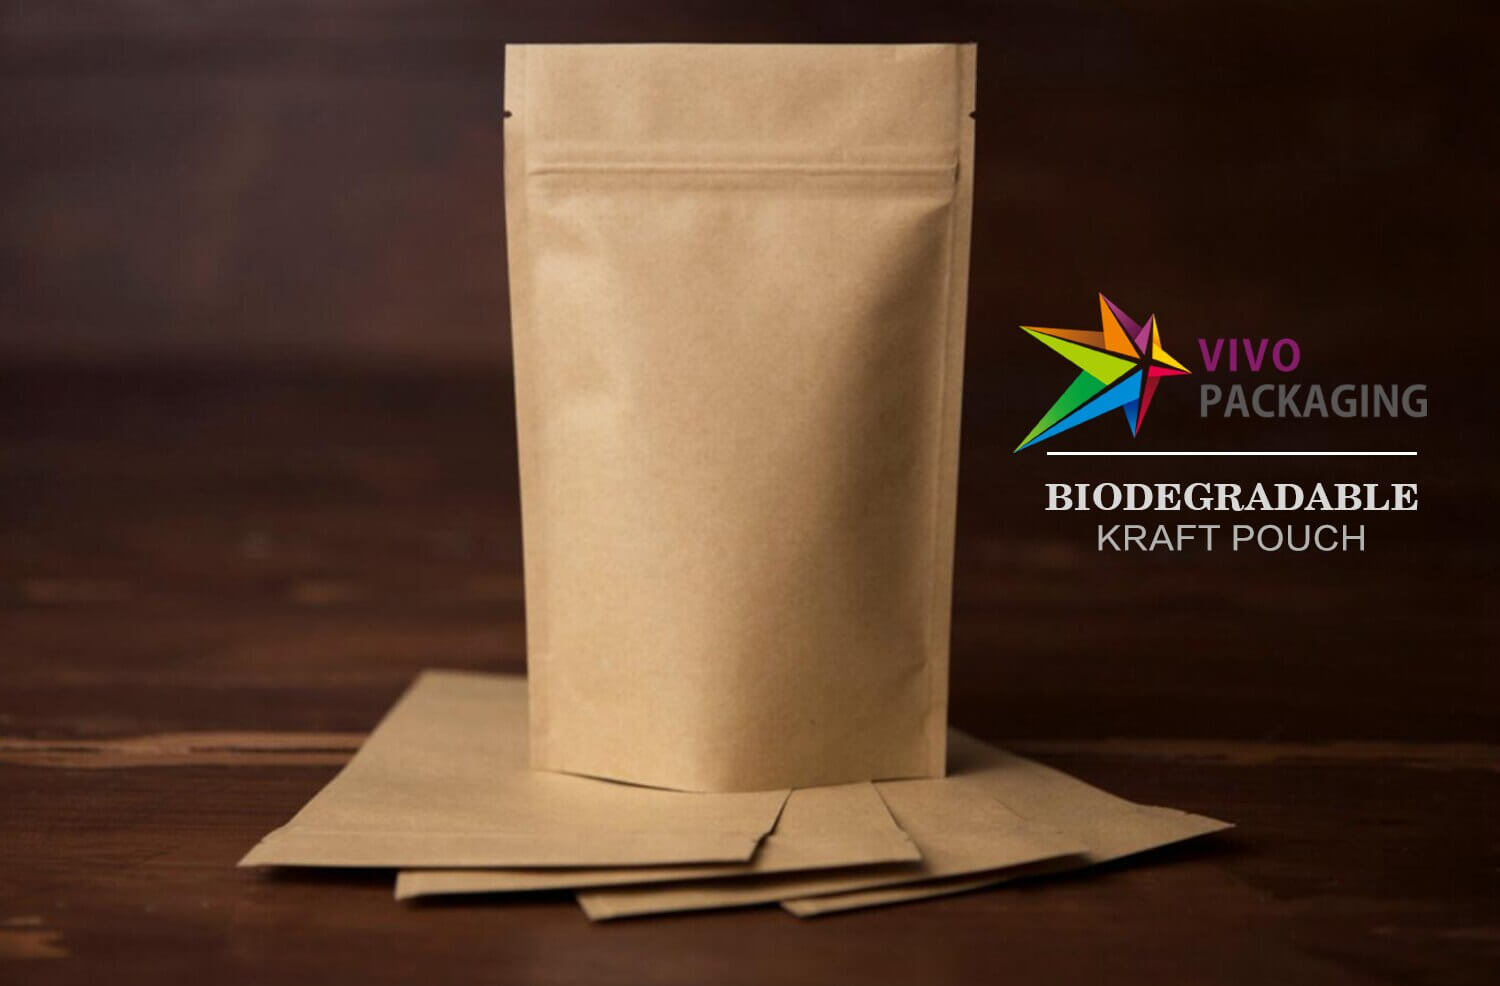 vivo packaging biodegradable kraft pouches 1